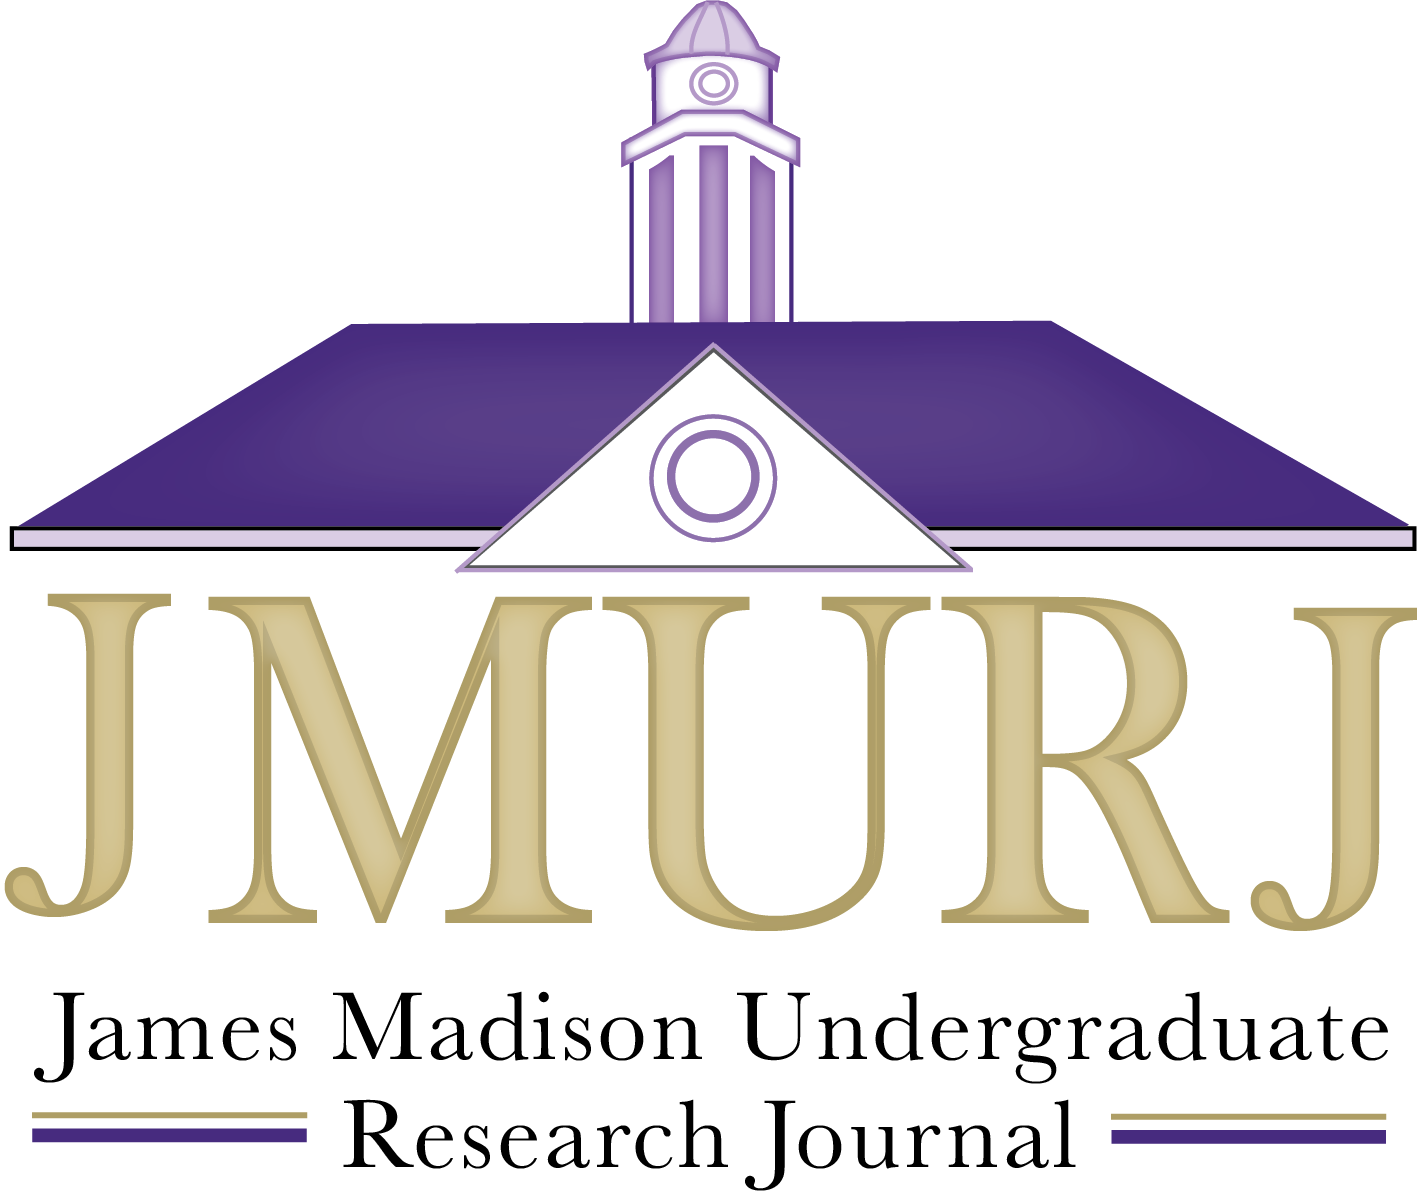 james madison undergraduate research journal